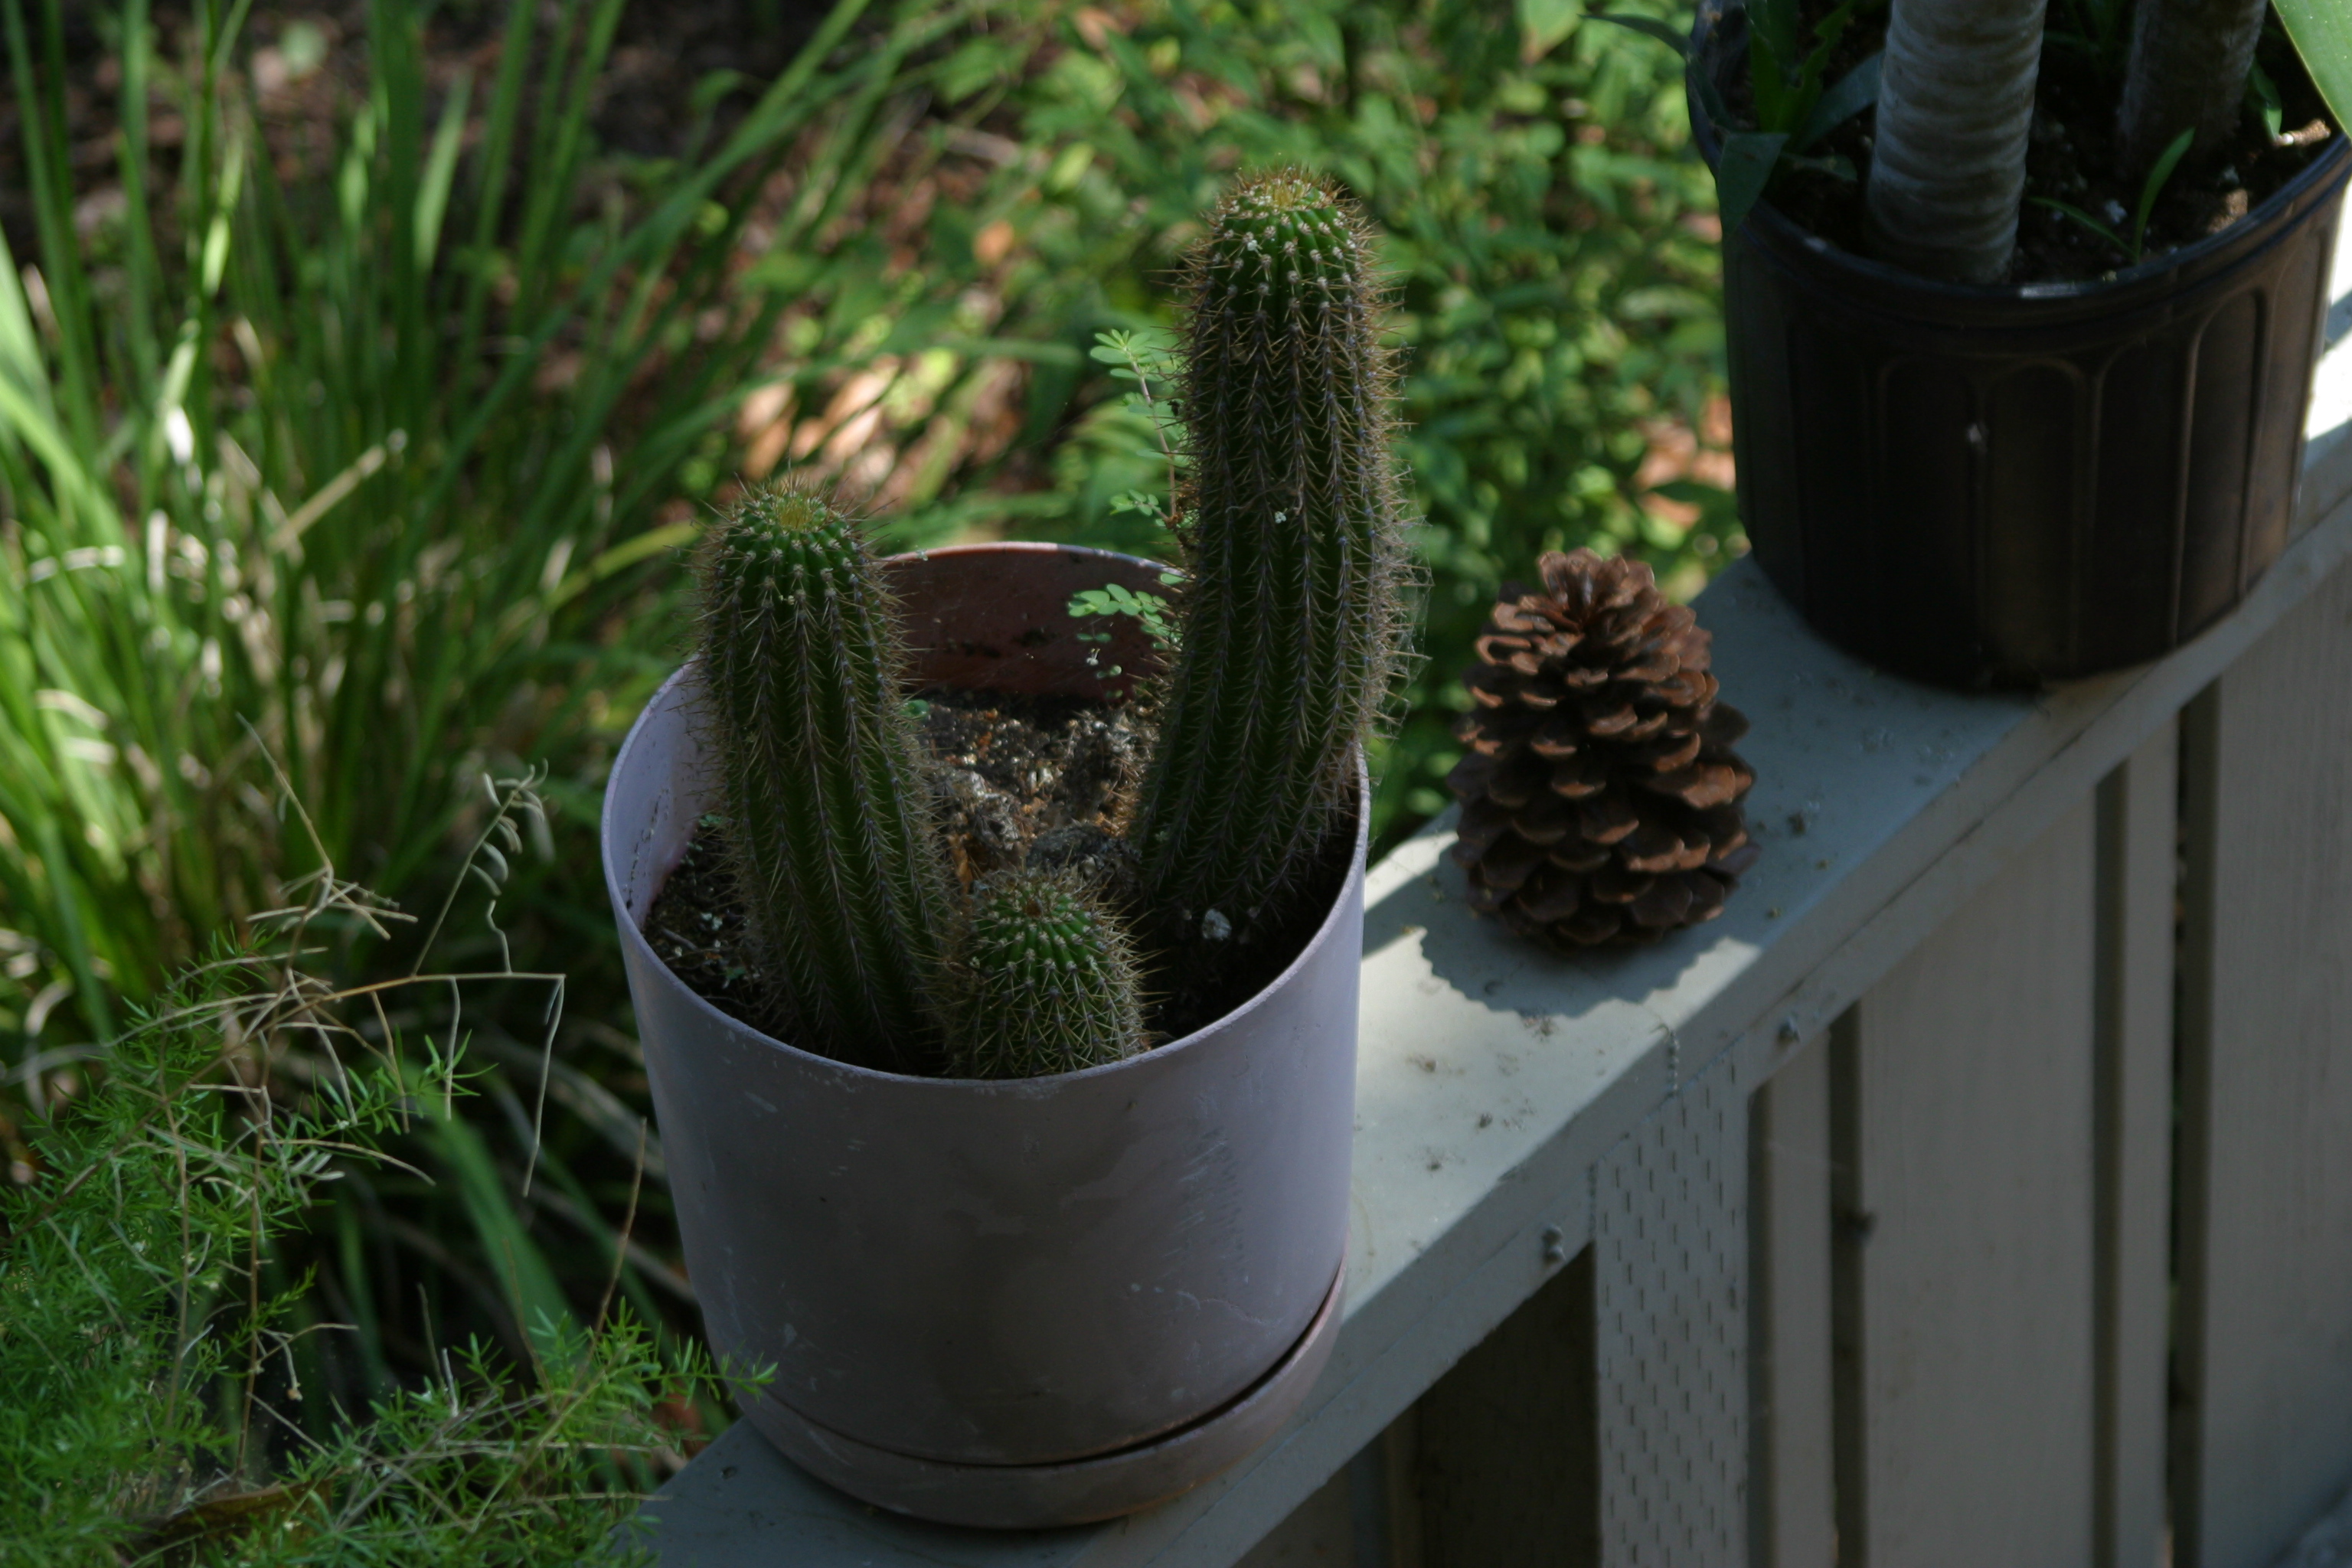 neighboring cacti